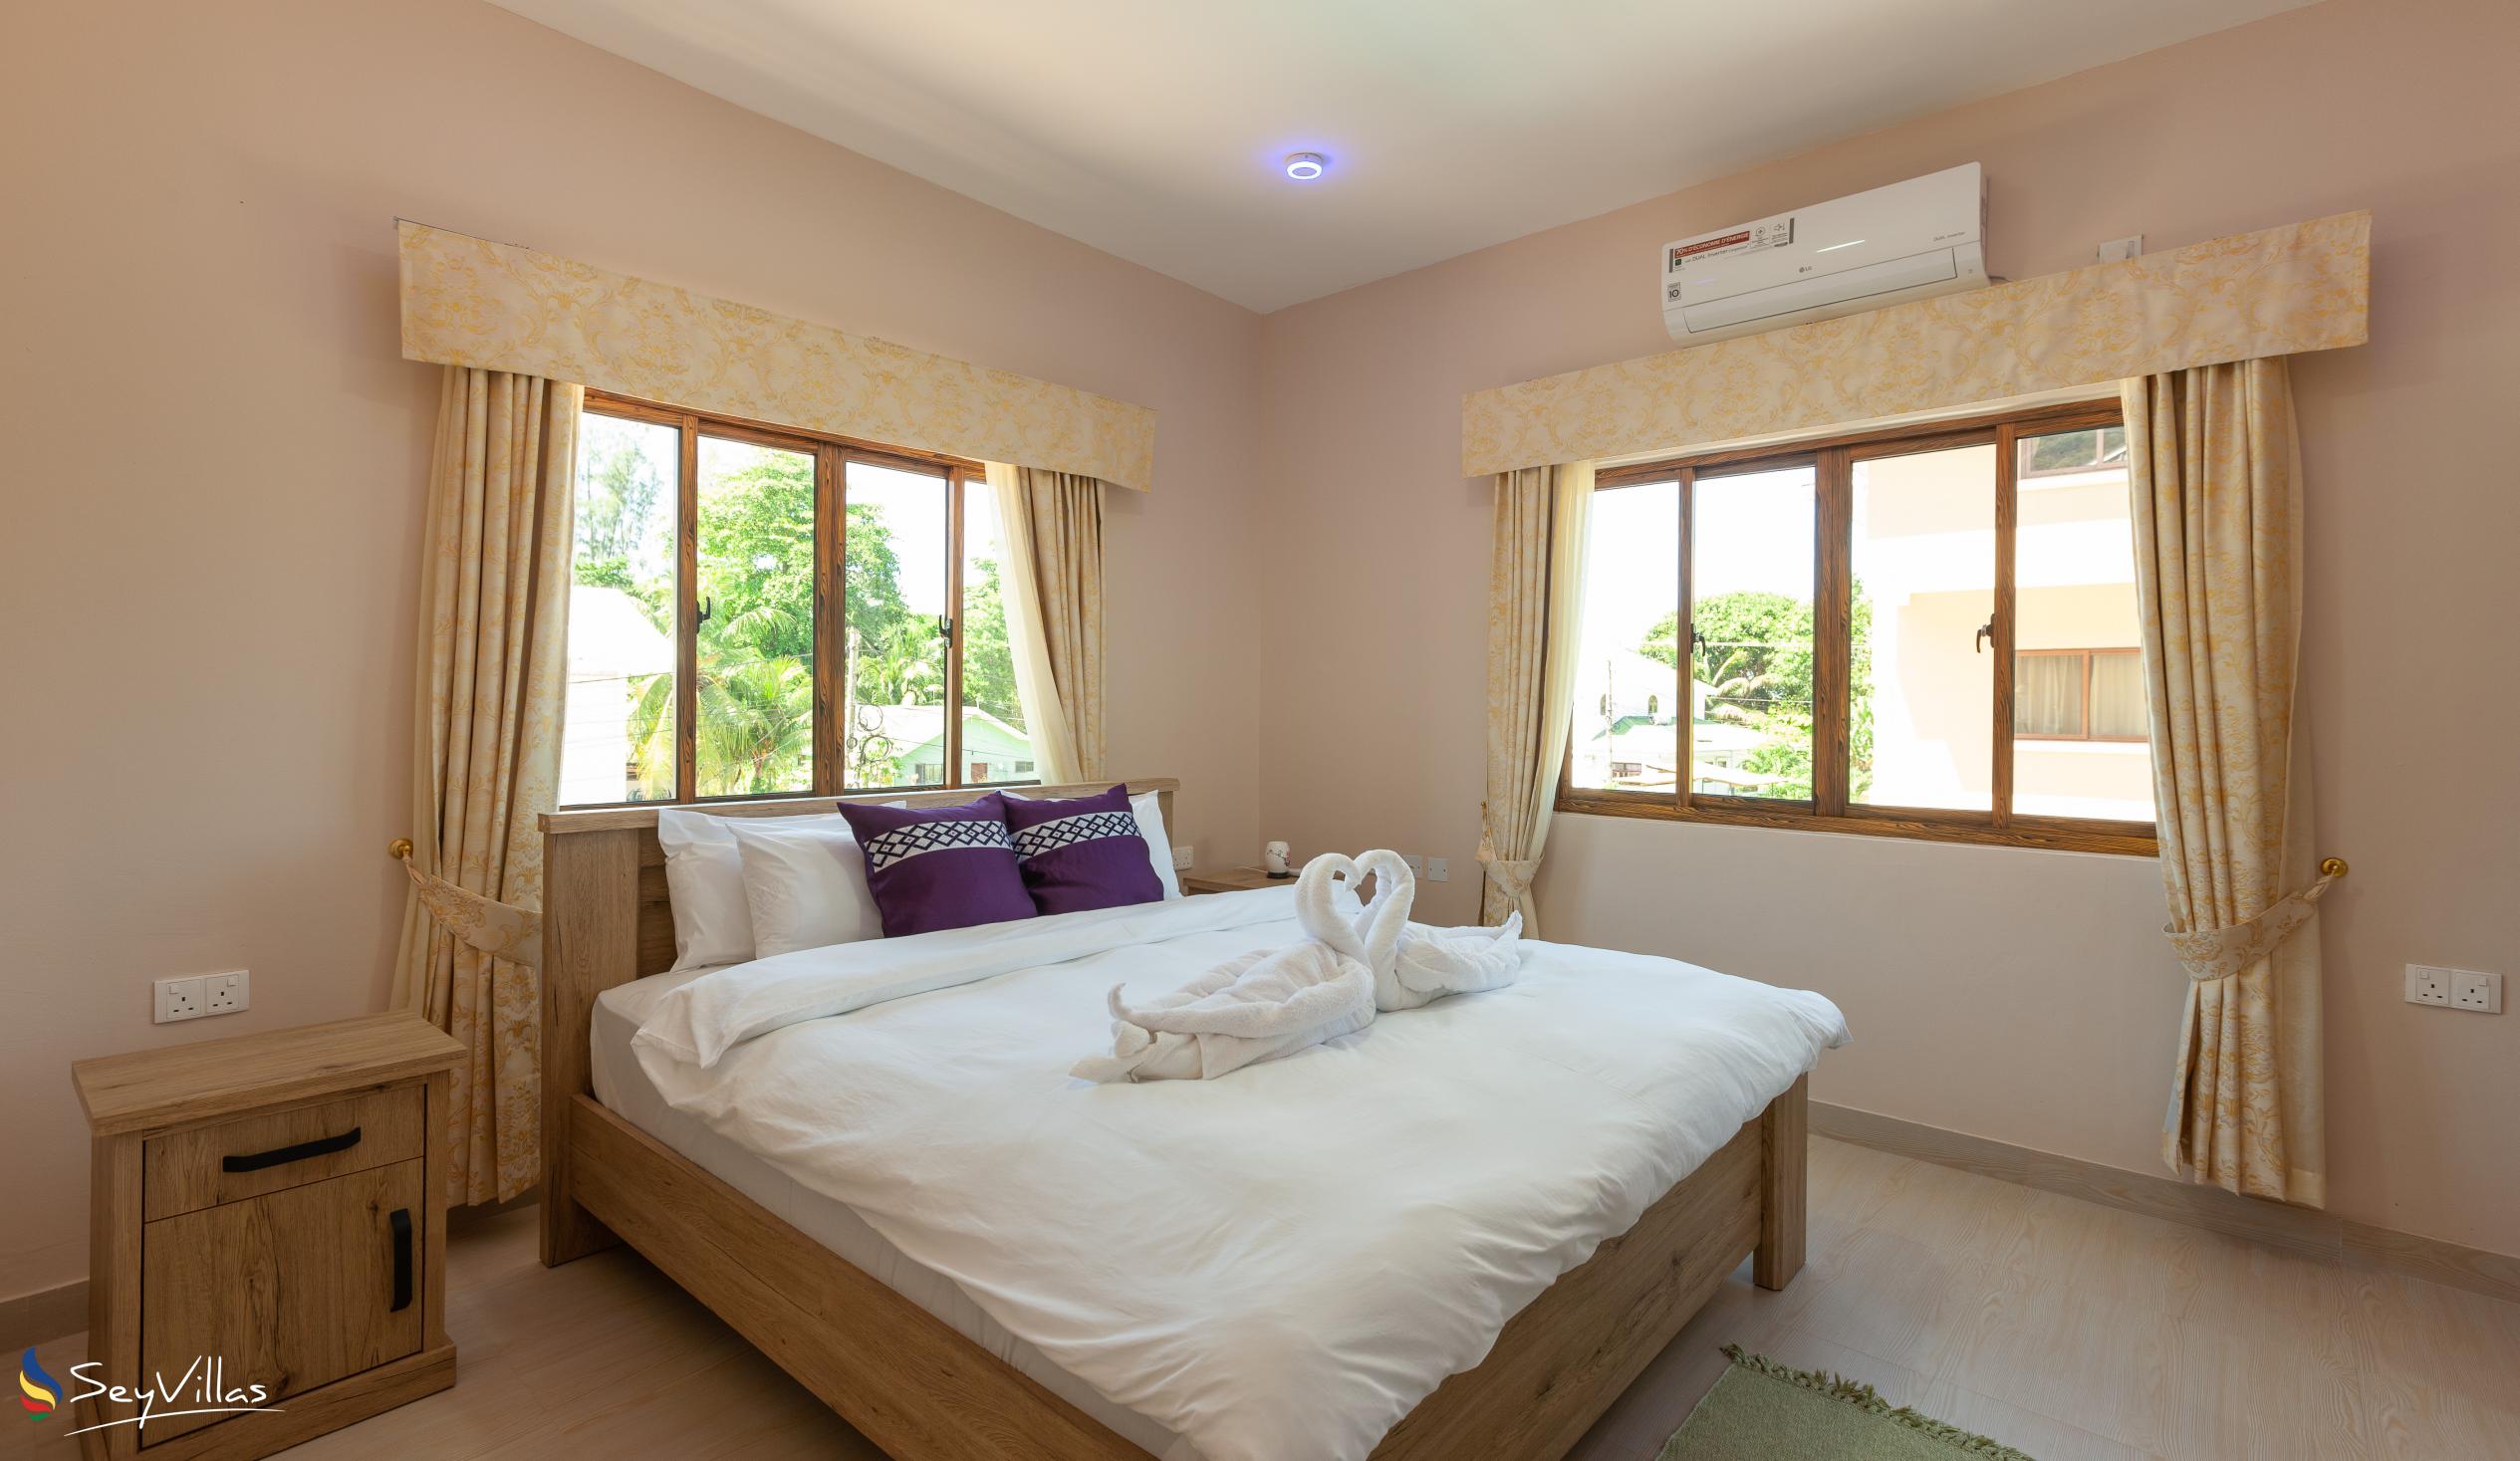 Photo 52: Stone Self Catering Apartments - 2-Bedroom Apartment - Praslin (Seychelles)